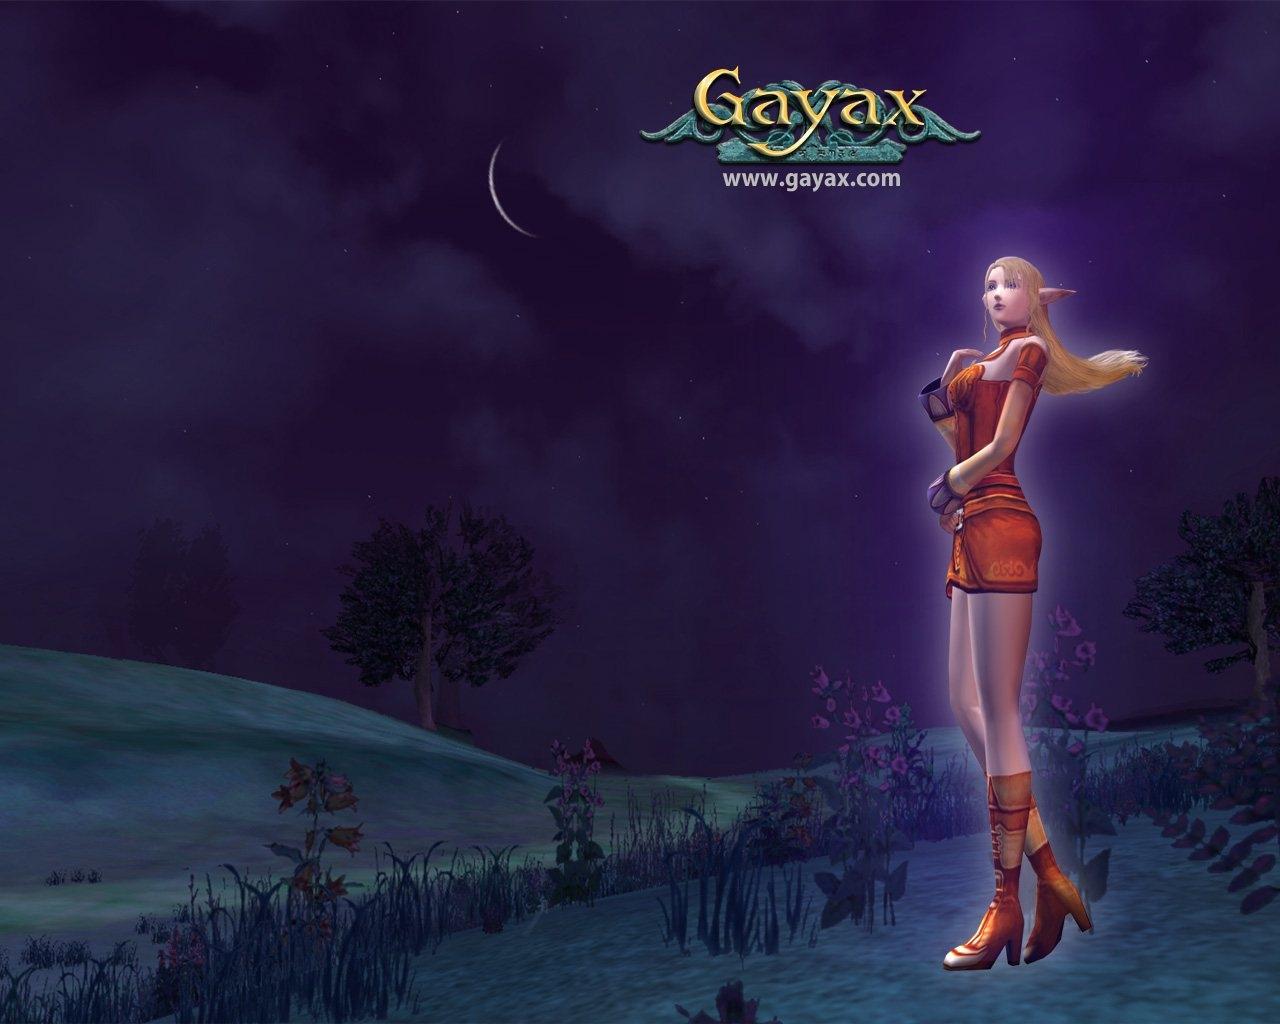 Gayax at 1024 x 1024 iPad size wallpapers HD quality